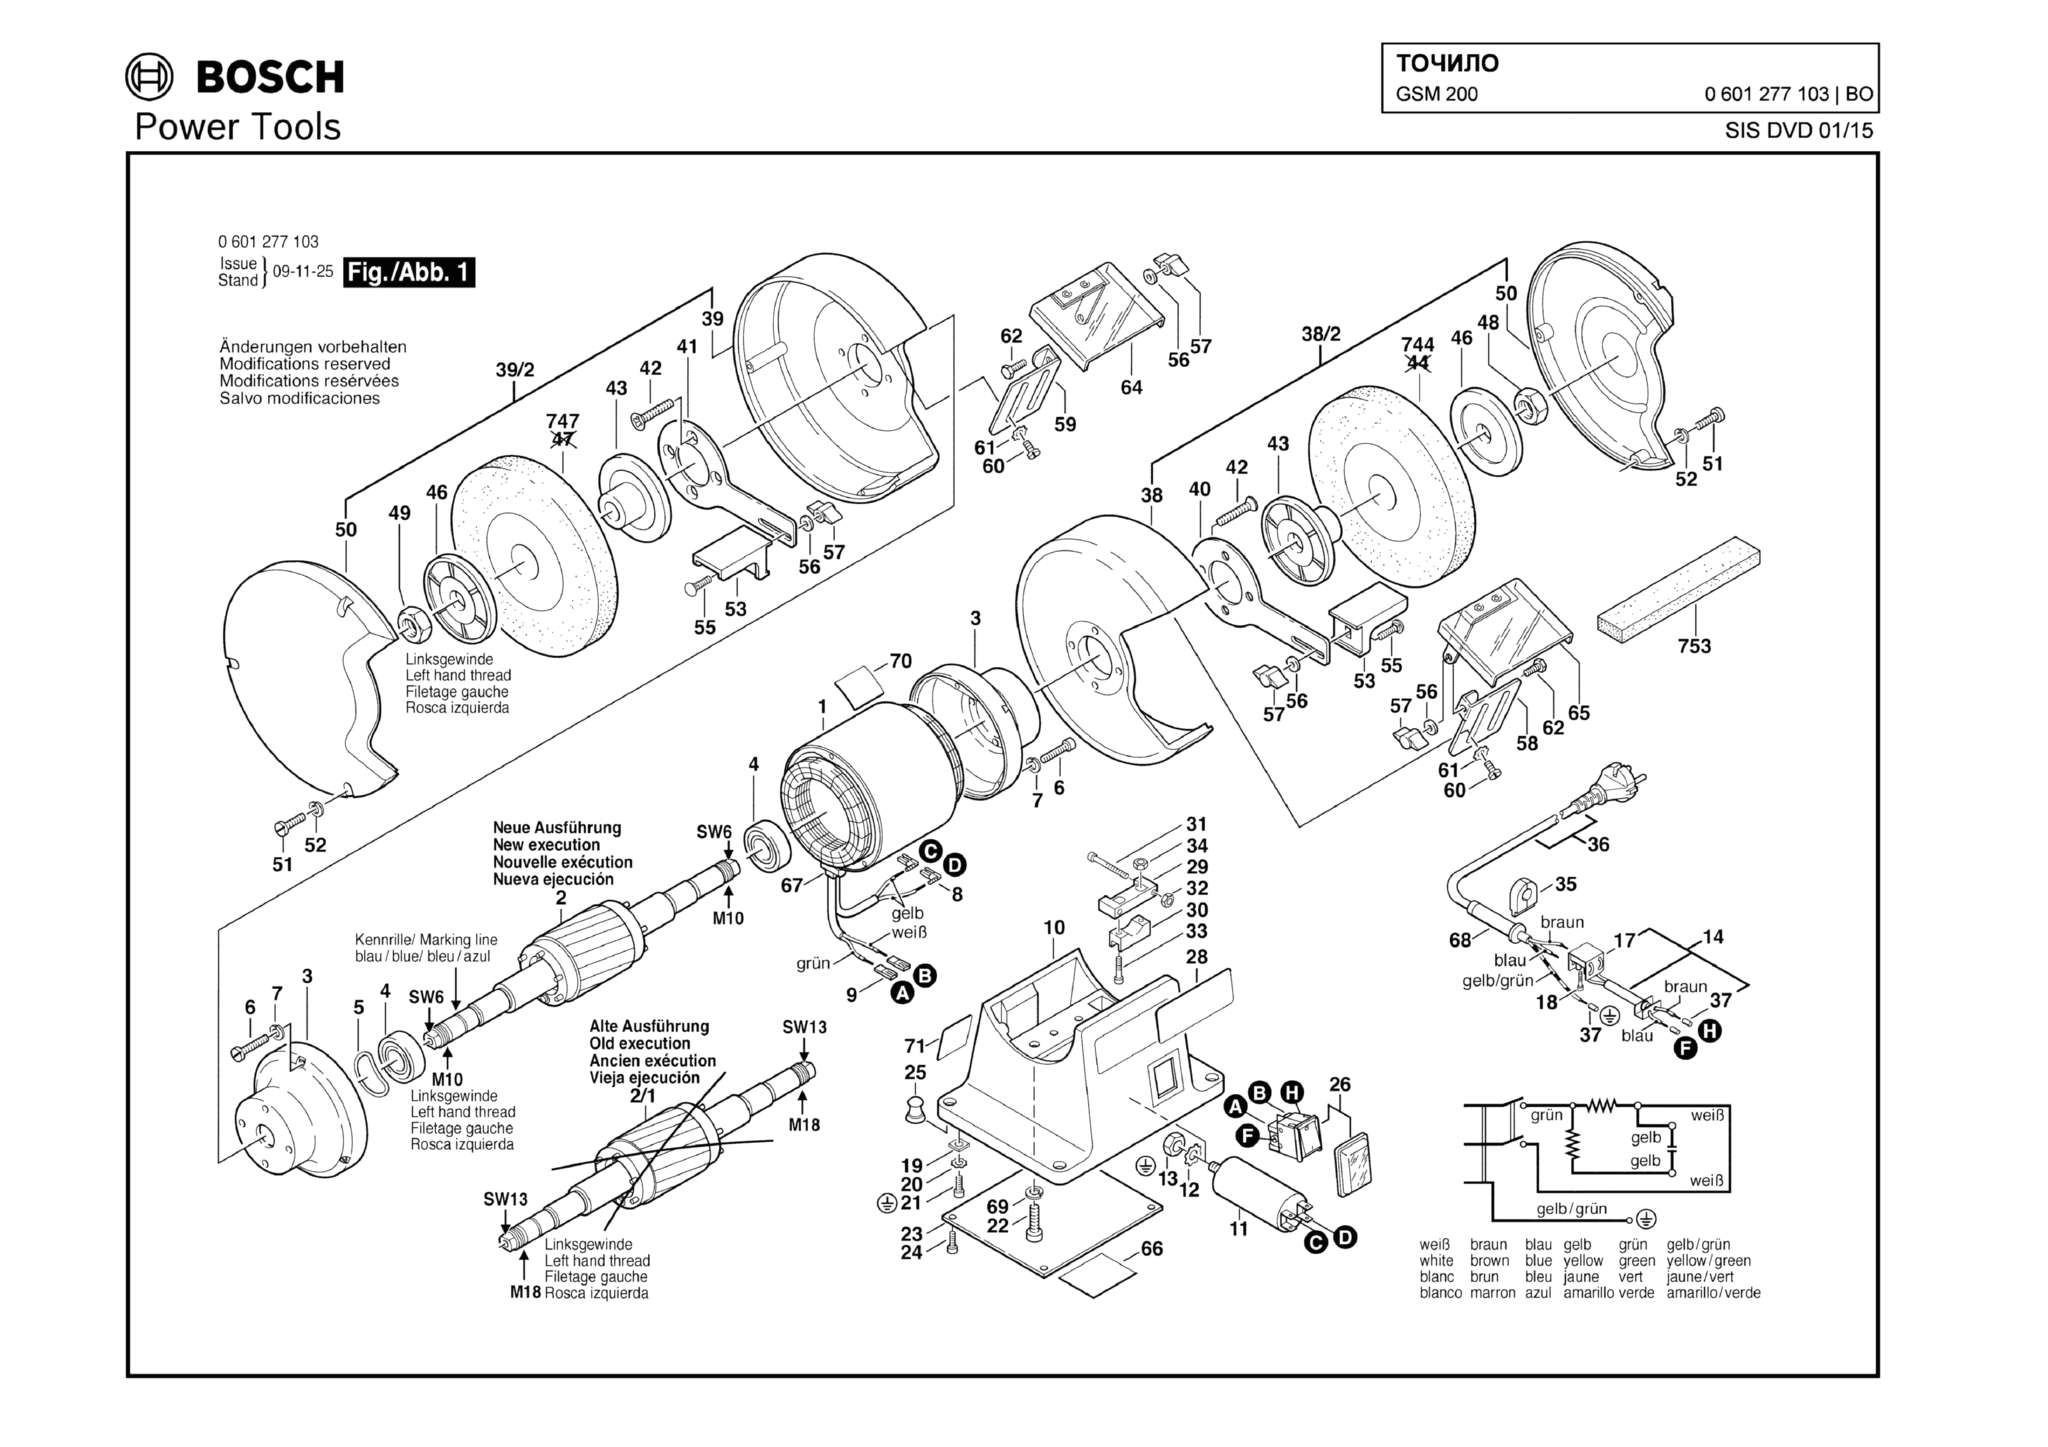 Запчасти, схема и деталировка Bosch GSM 200 (ТИП 0601277103)